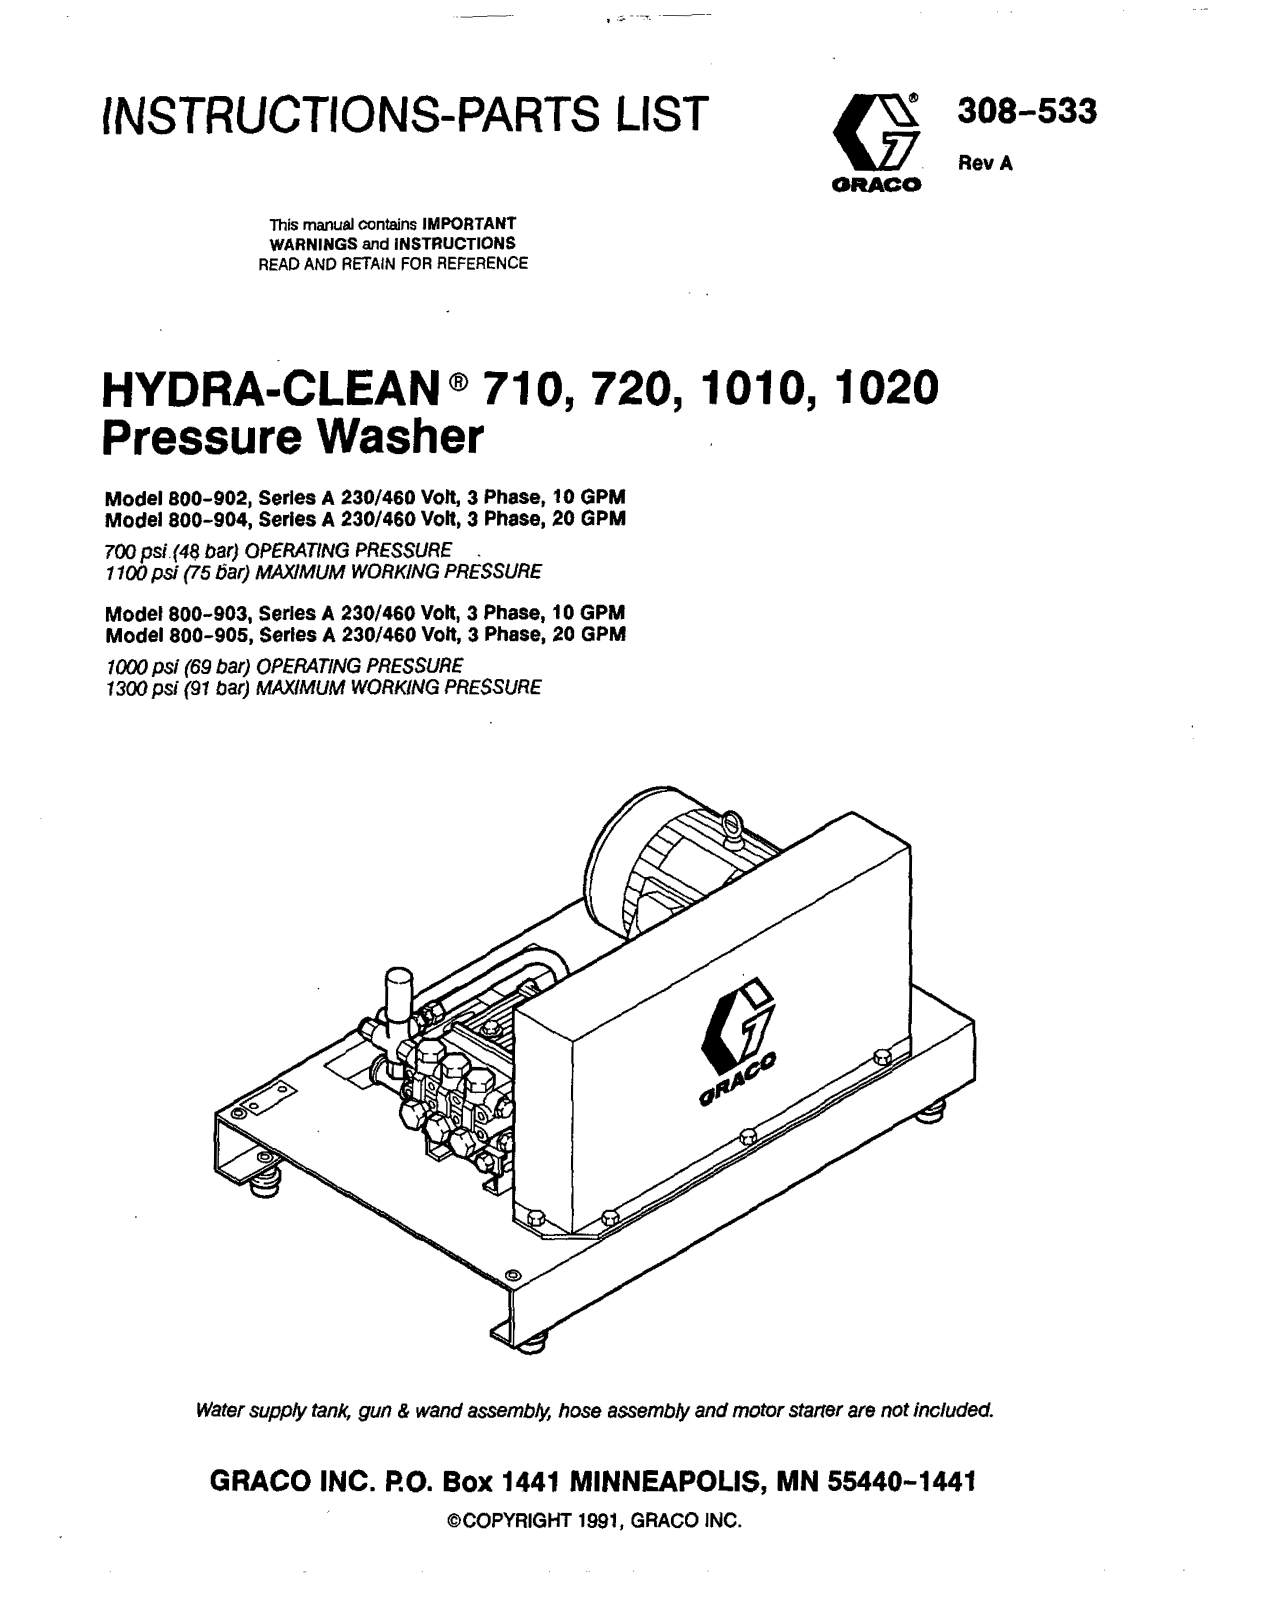 Graco Inc Hydra-Clean  A, Hydra-Clean 1020, Hydra-Clean 800-902, Hydra-Clean 308-533, 720 User Manual